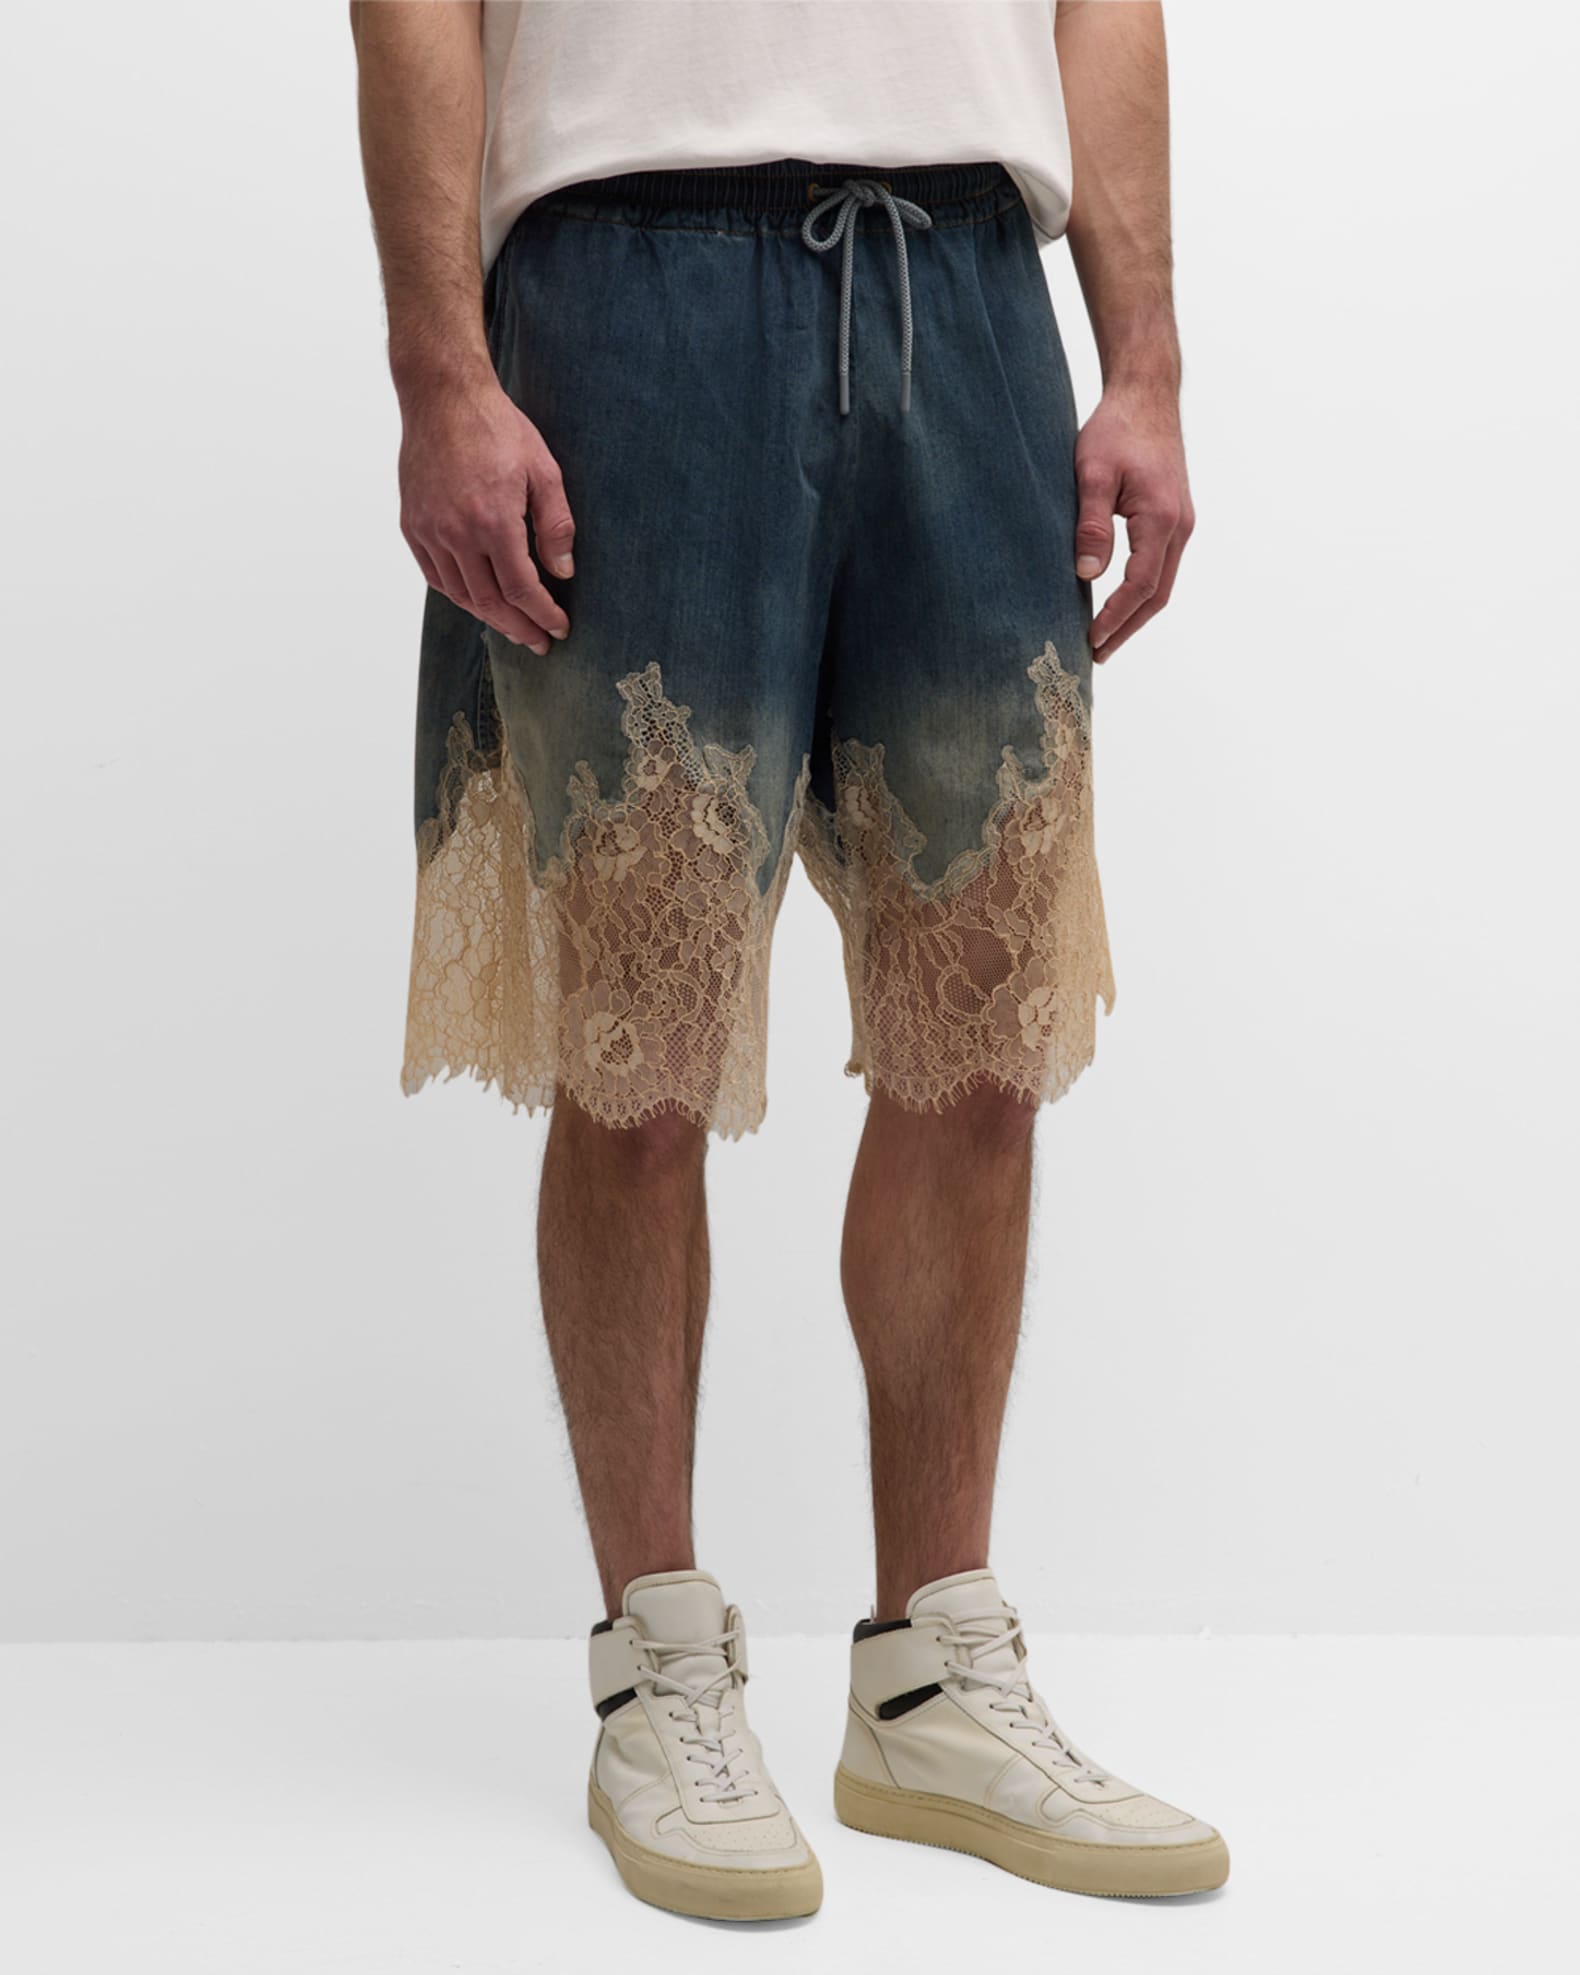 Men's Denim and Lace Drawstring Shorts